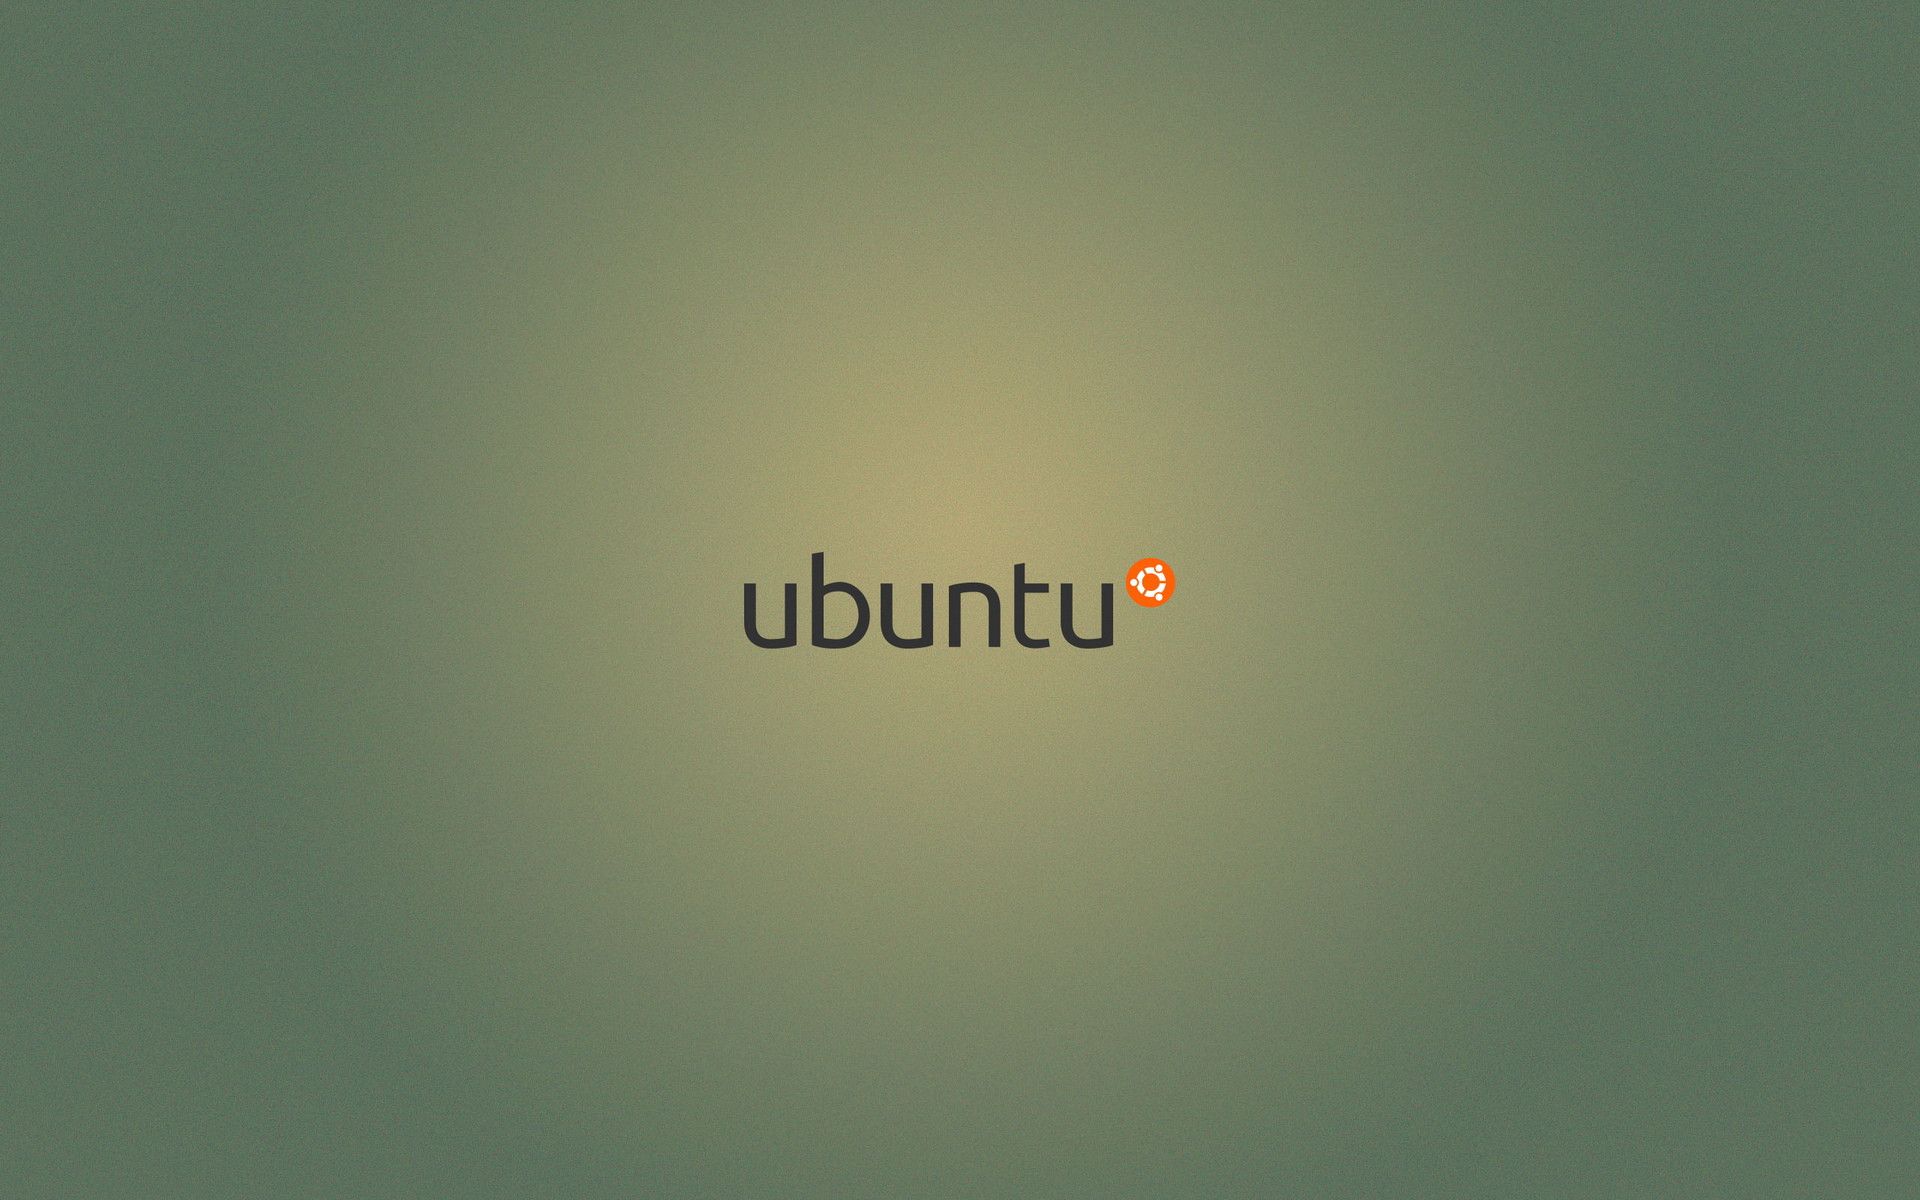 Ubuntu Wallpaper Large HD Database